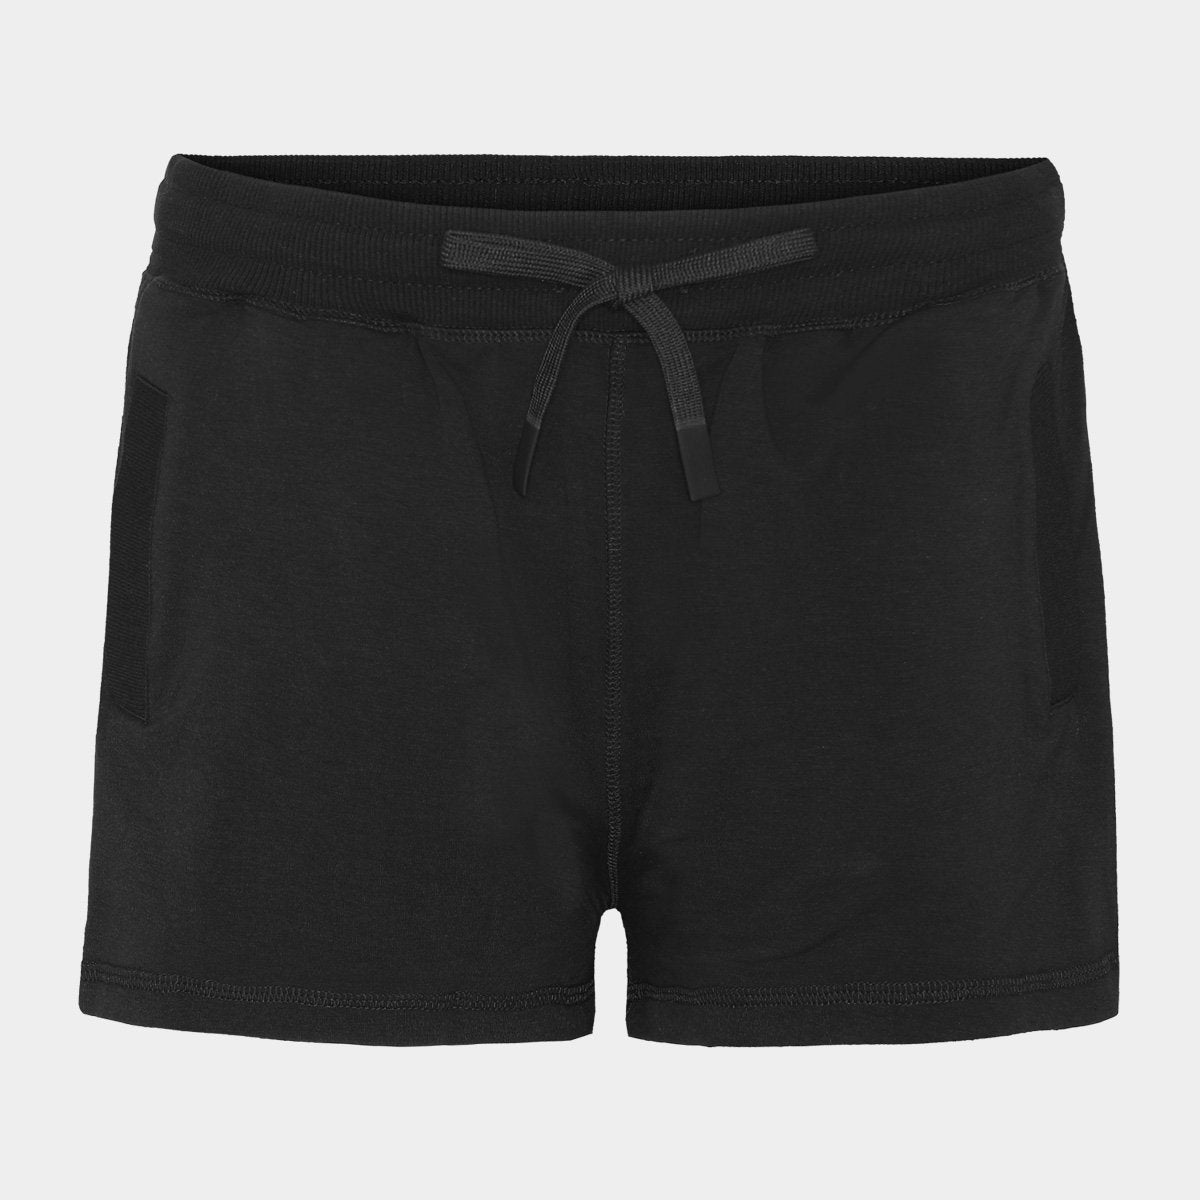 Se Bambus sweatshorts | sorte sweat shorts til damer fra Boody, XL hos Bambustøj.dk